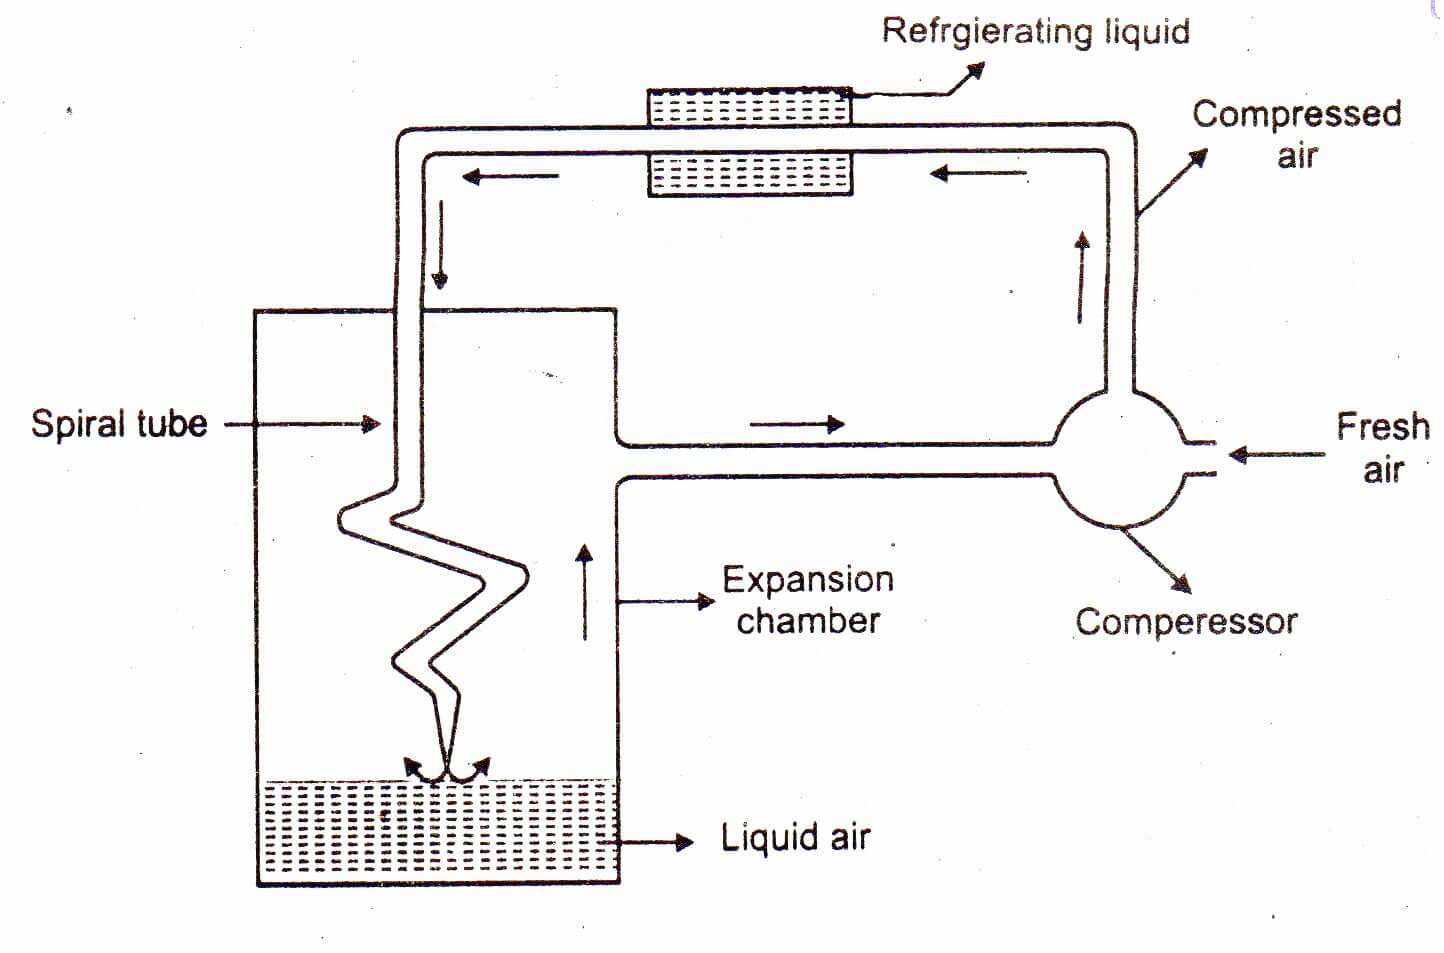 Linde method for liquefaction of gases